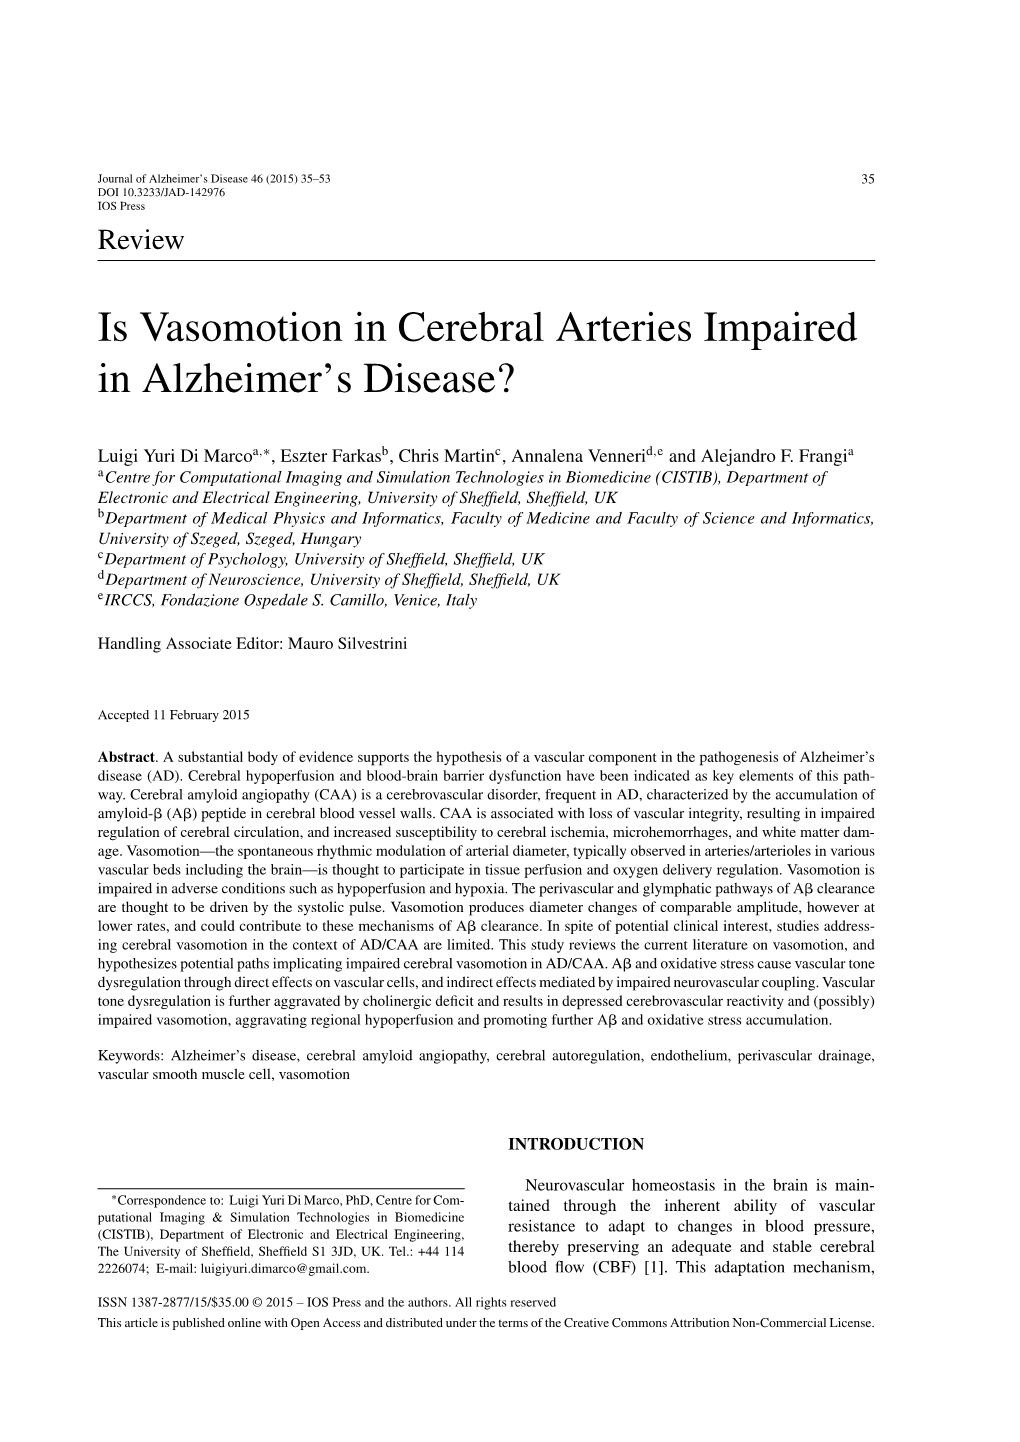 Is Vasomotion in Cerebral Arteries Impaired in Alzheimer's